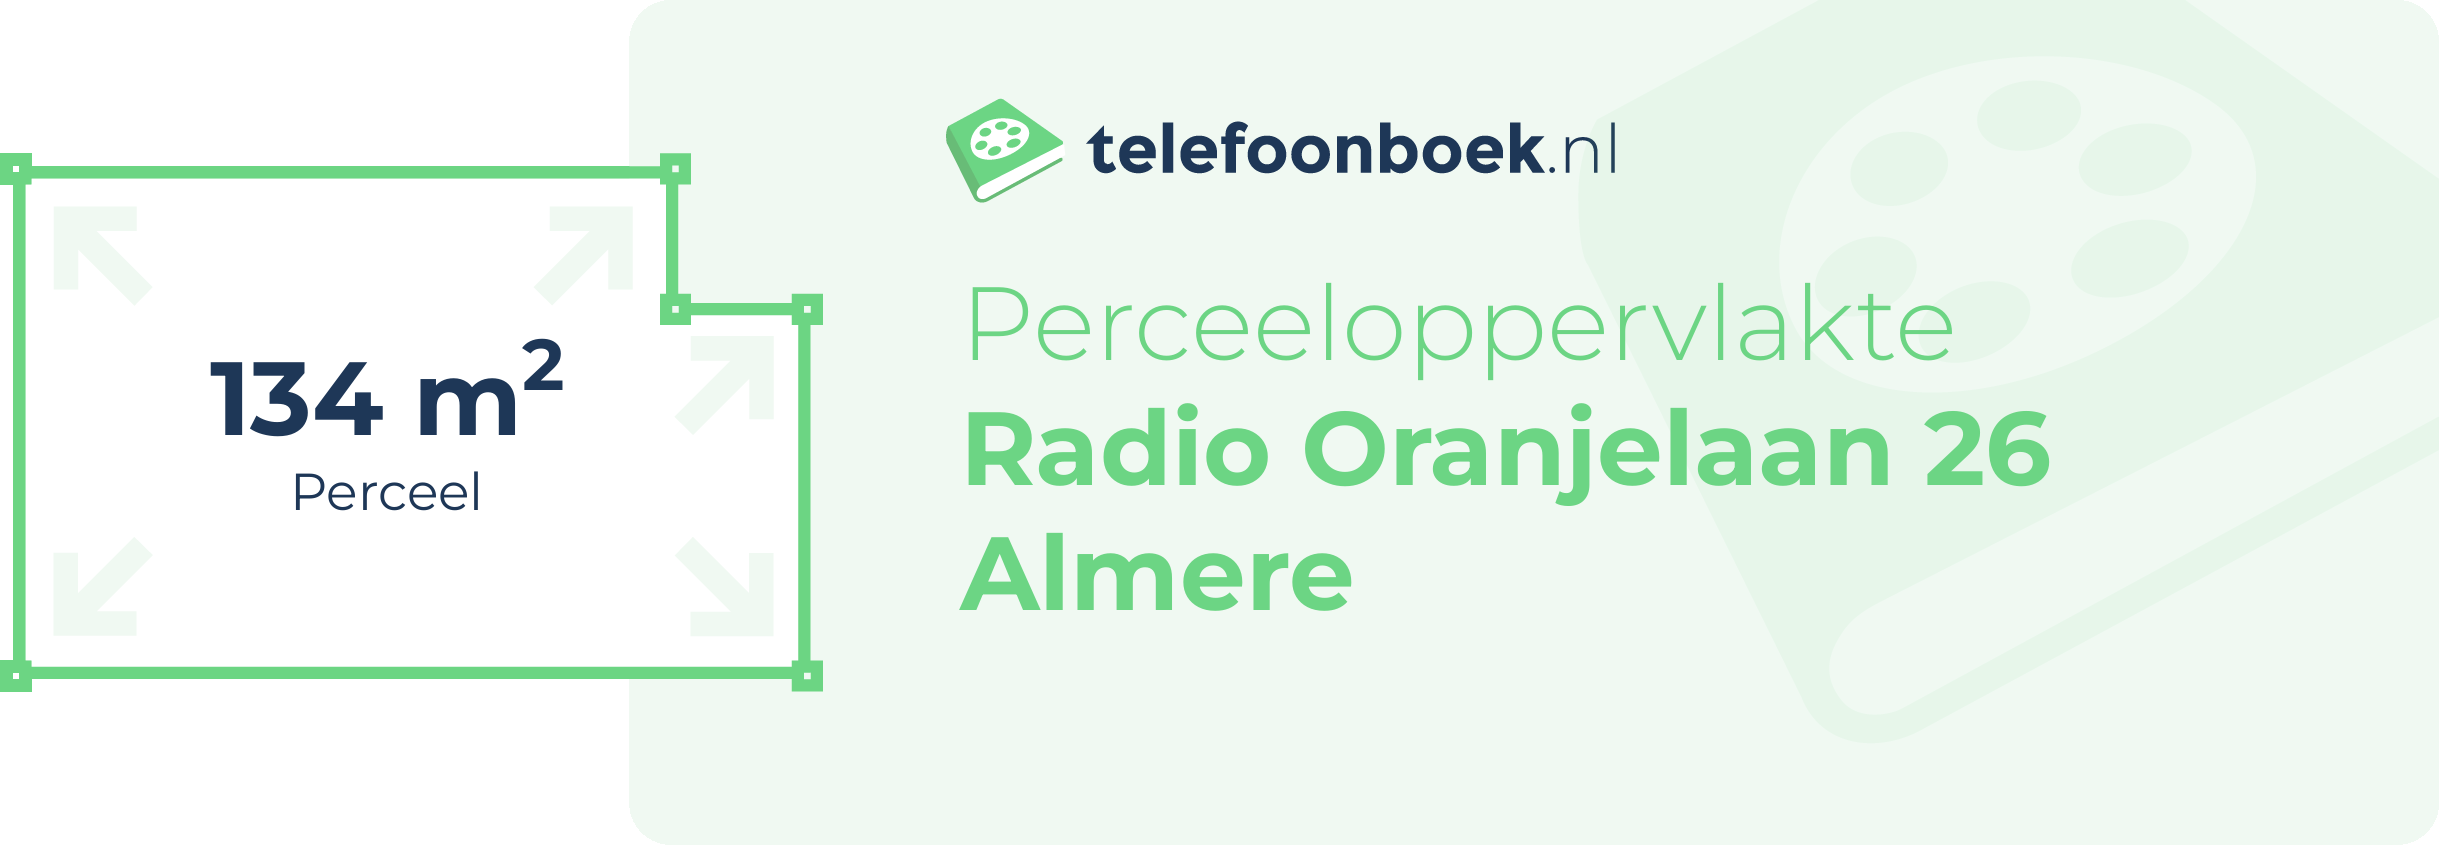 Perceeloppervlakte Radio Oranjelaan 26 Almere